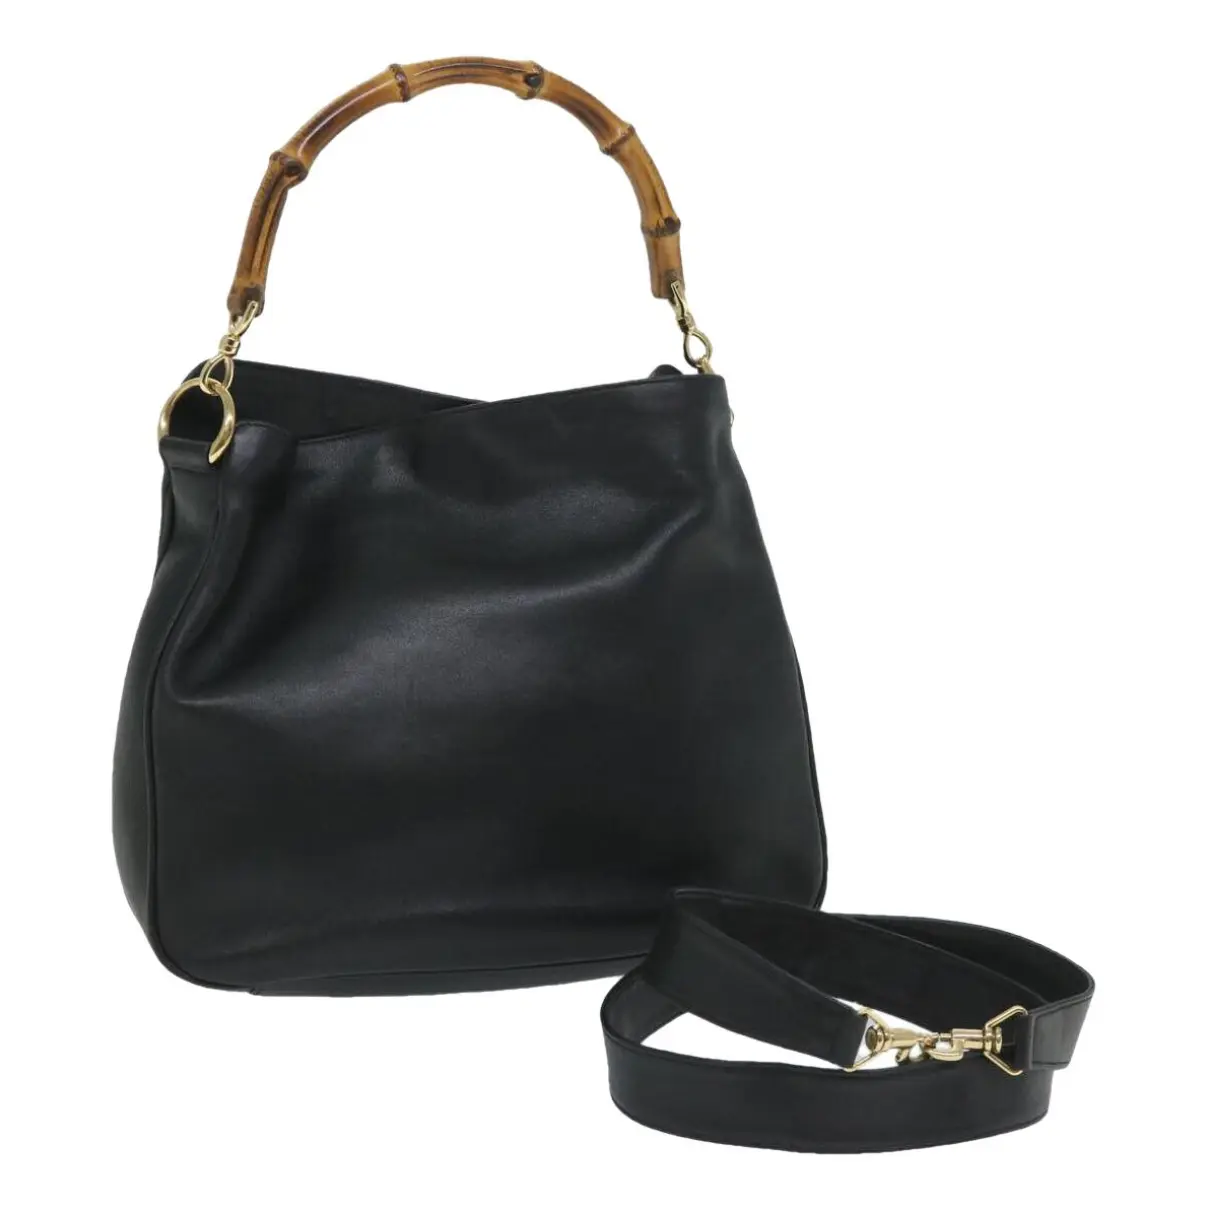 Bamboo Top Handle leather handbag